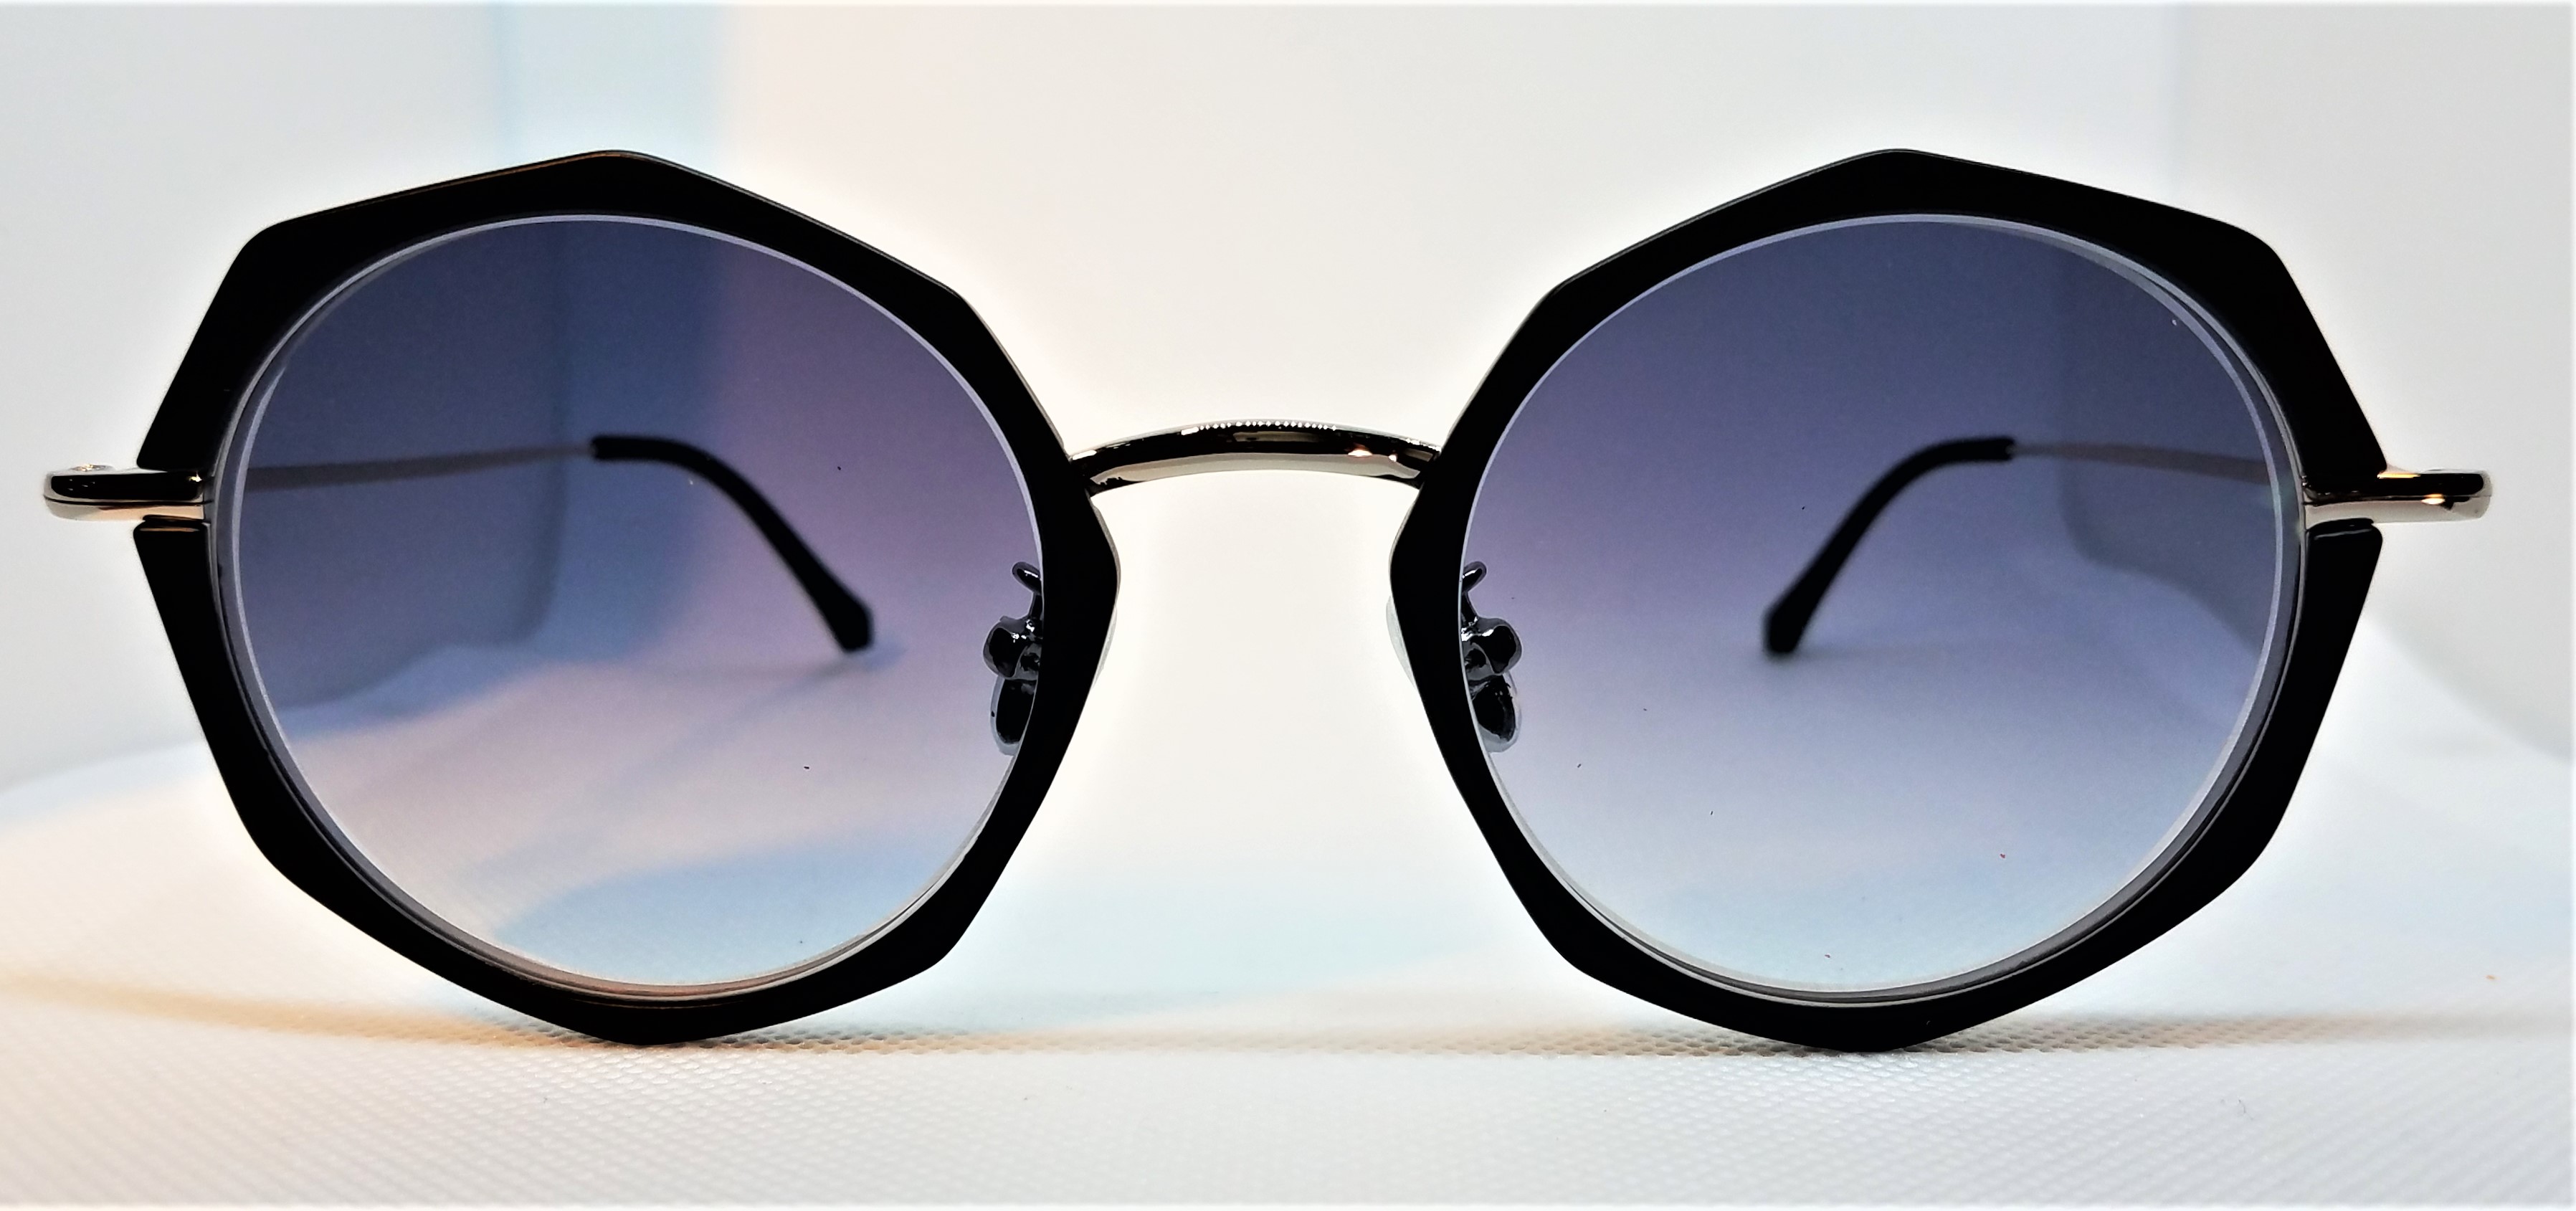 geometric glasses with black tint